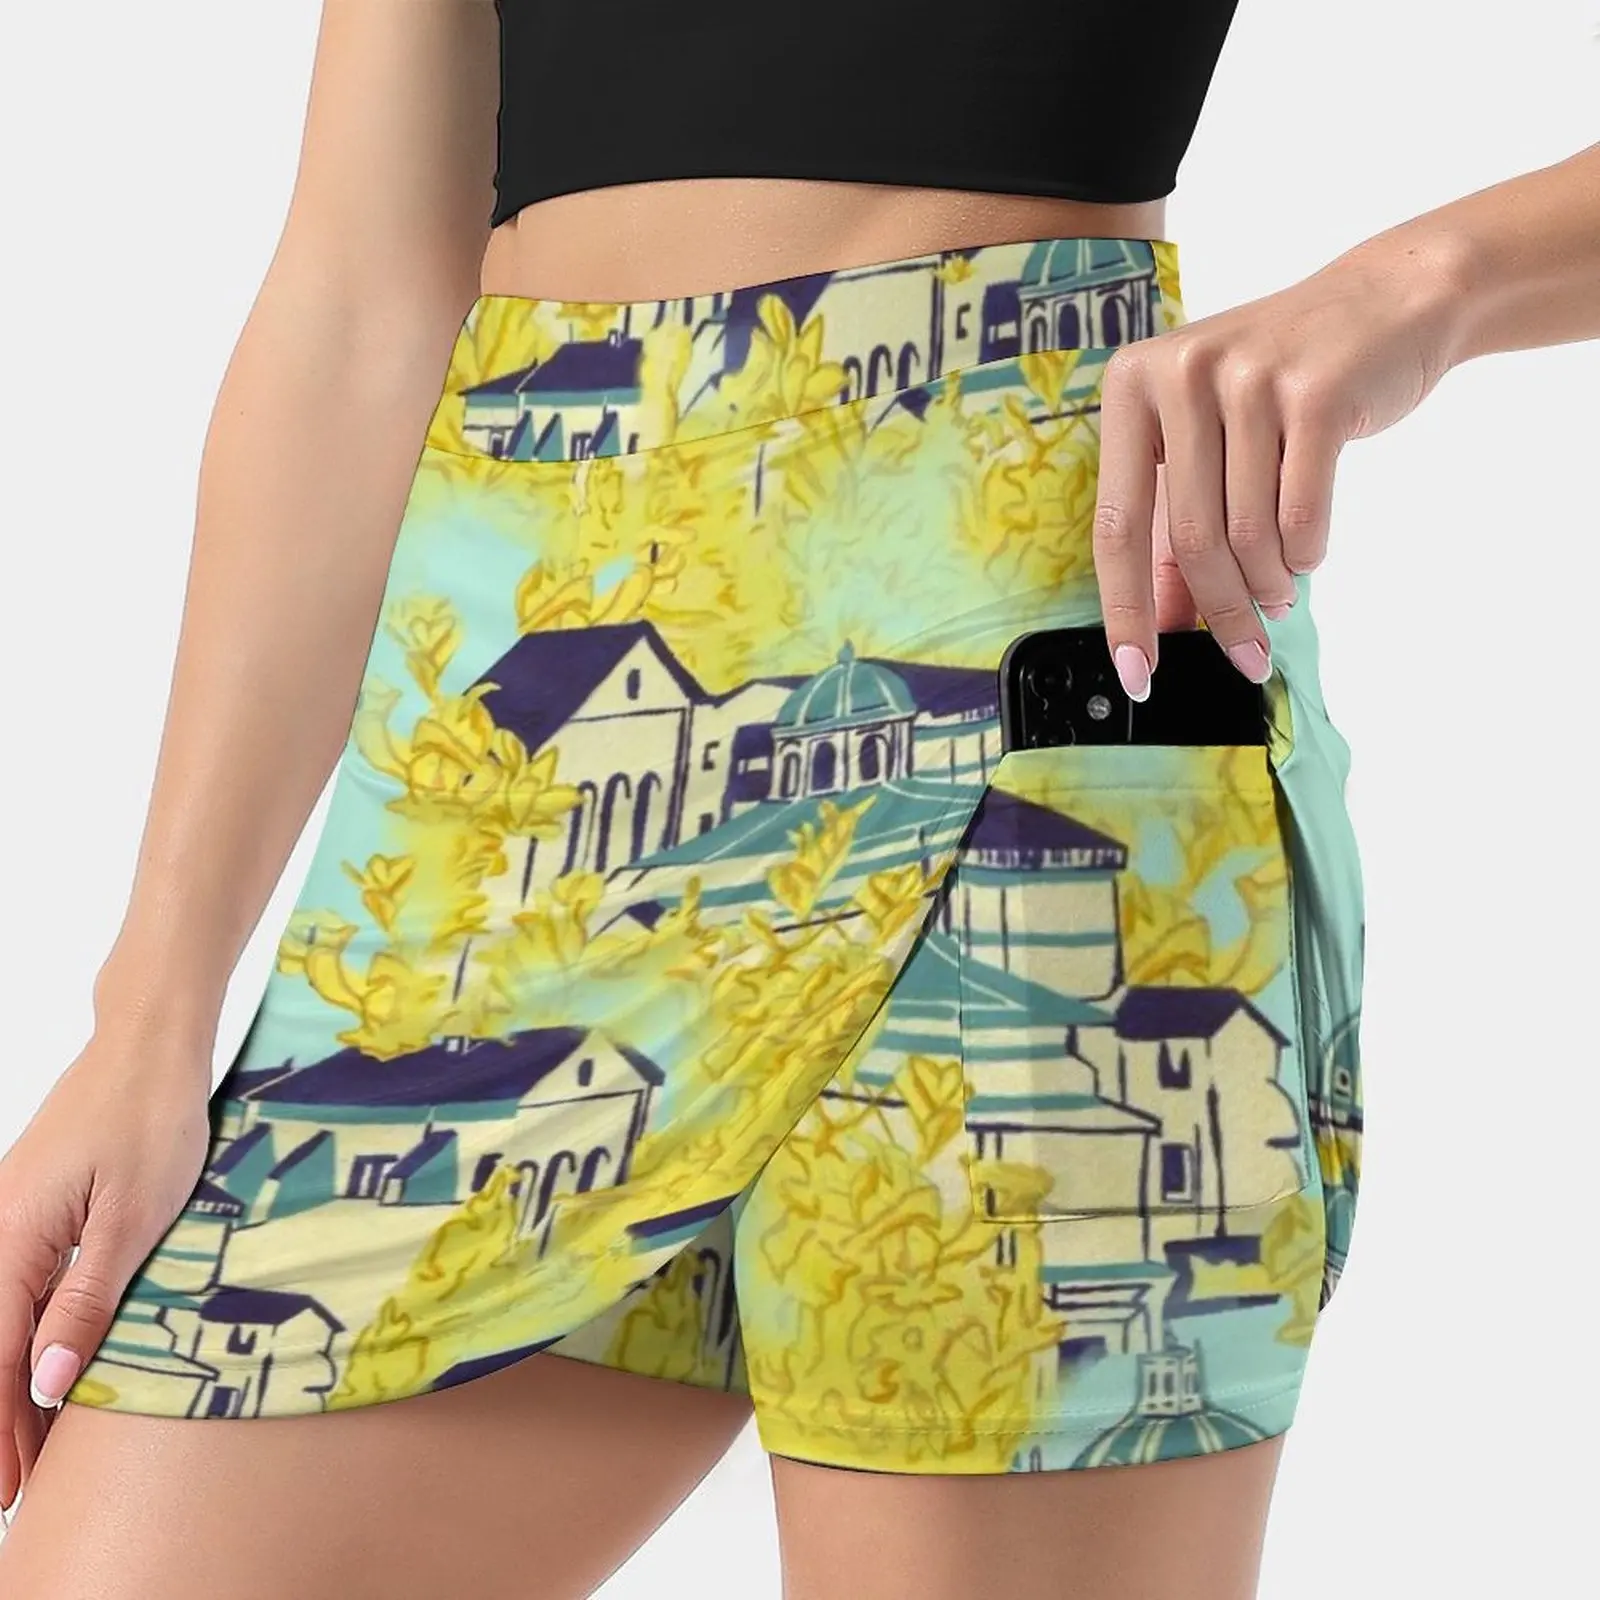 

Roma Women's skirt Sport Skort Skirt With Pocket Fashion Korean Style Skirt 4Xl Skirts Italy Rome Blue Skies Travel City View